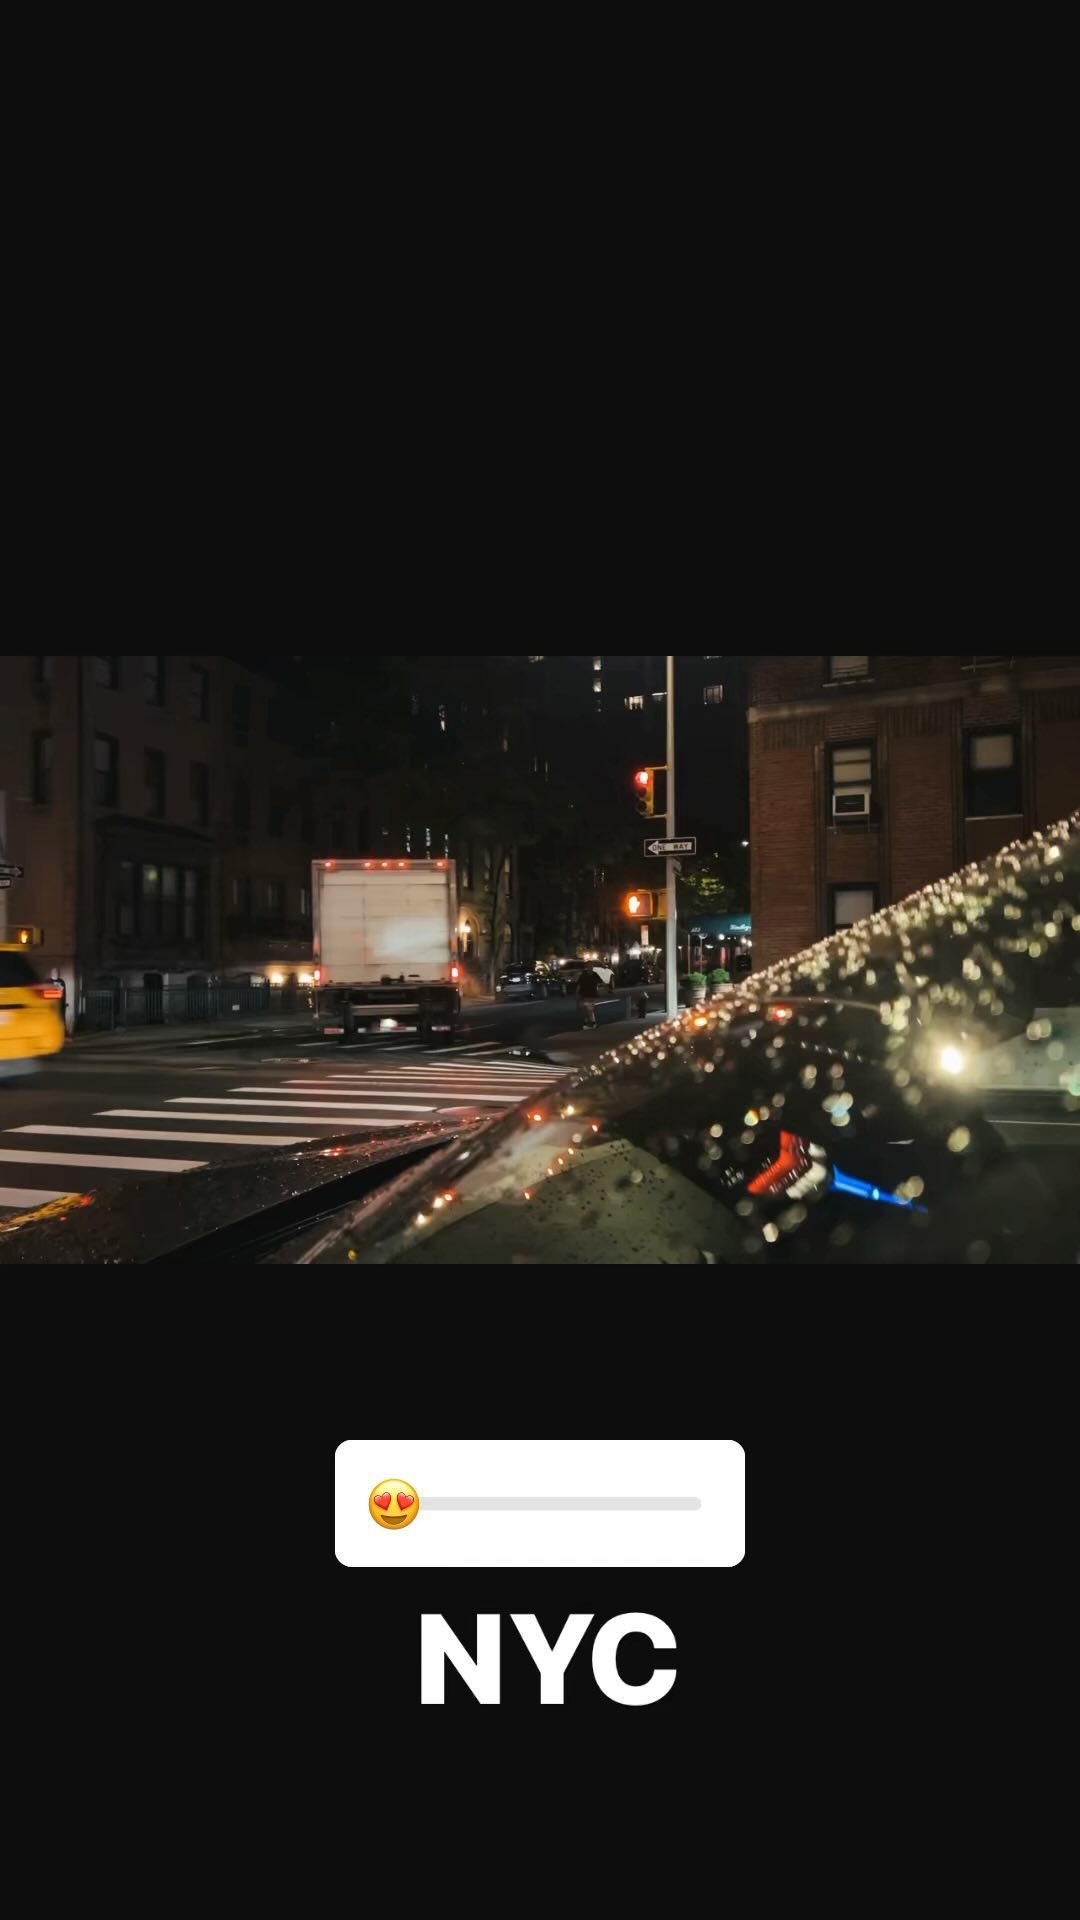 Hey NYC! You‘re awesome ♥️
 #NYC #NewYork #BrooklynBridge #5Avenue #Fashion #StreetLife #BigApple #DancingInTheMoonlight #Toploader #InstaLife #InstaPic #InstaLove #summerinthecity #newyorkstateofmind #empirestatebuilding #rainysummernights #Summer #cocktails #goodwine #Broadway #subway #newyorkcity #newyorkcity #newyorker #vacation #home